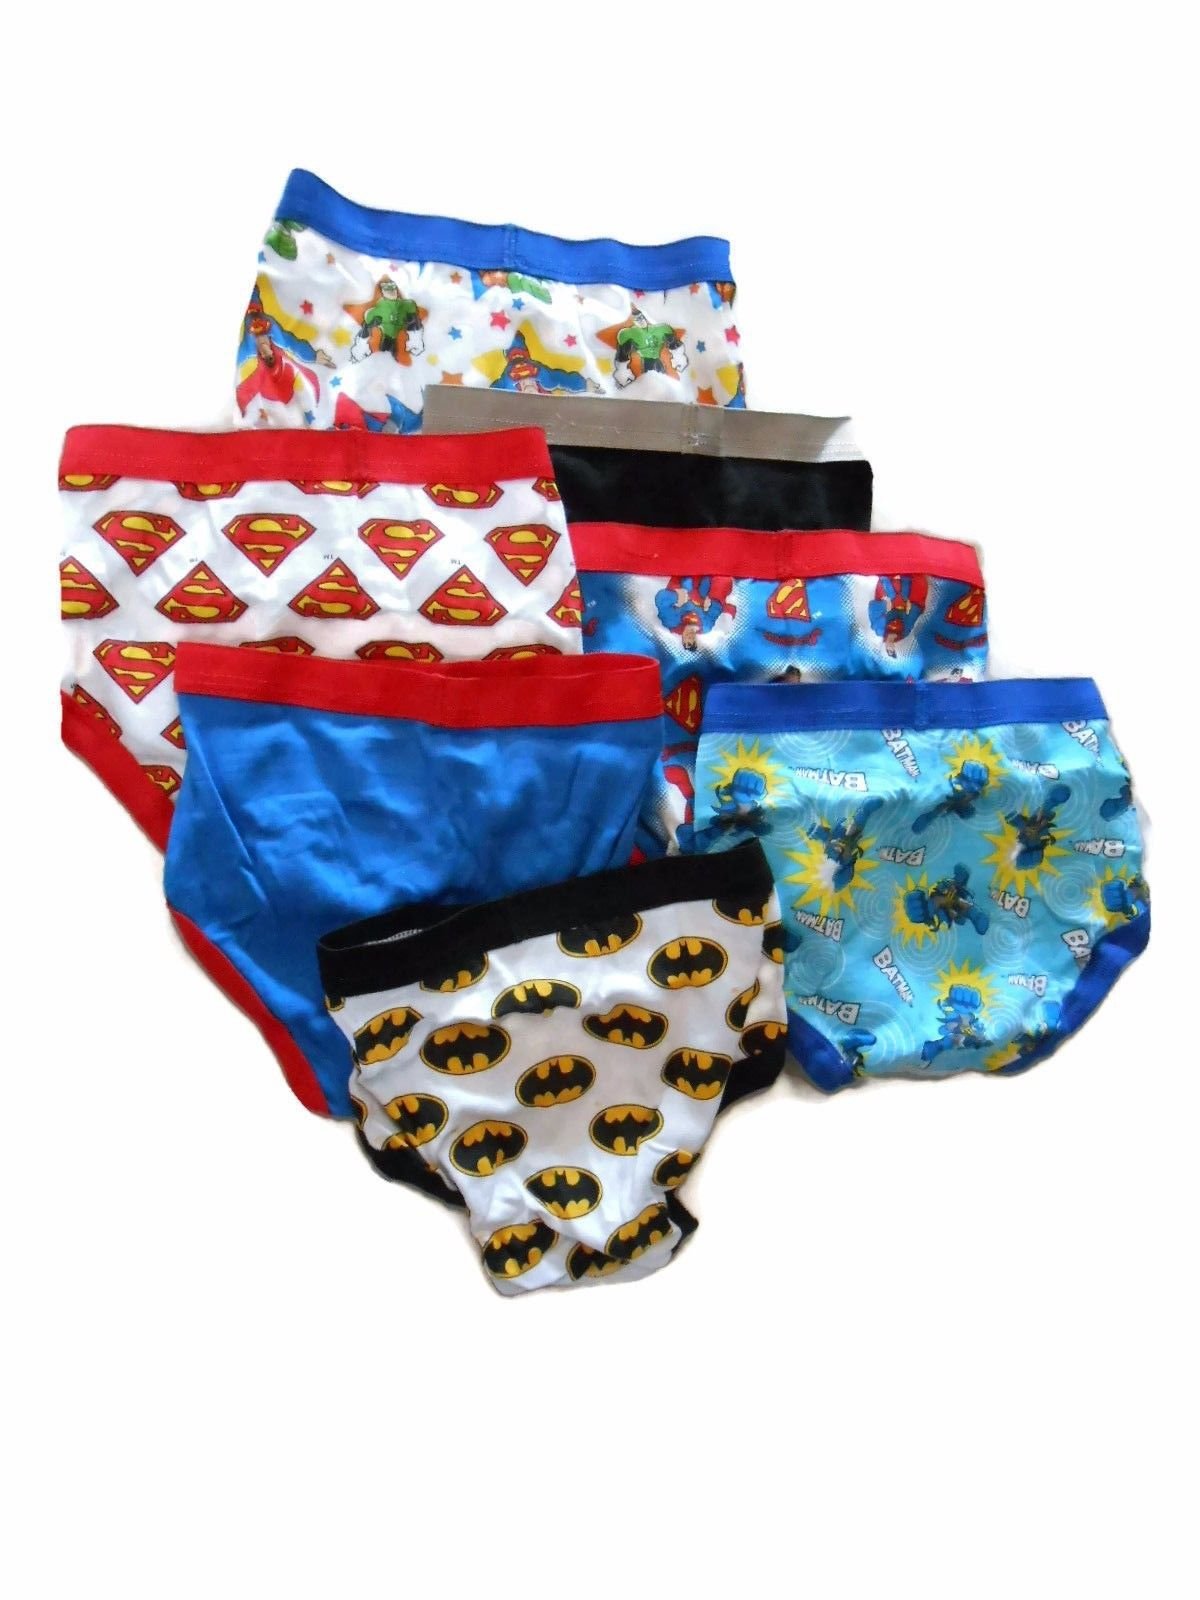 DC Superfriends Toddler Boys Underwear, 7-Pack - image 4 of 4